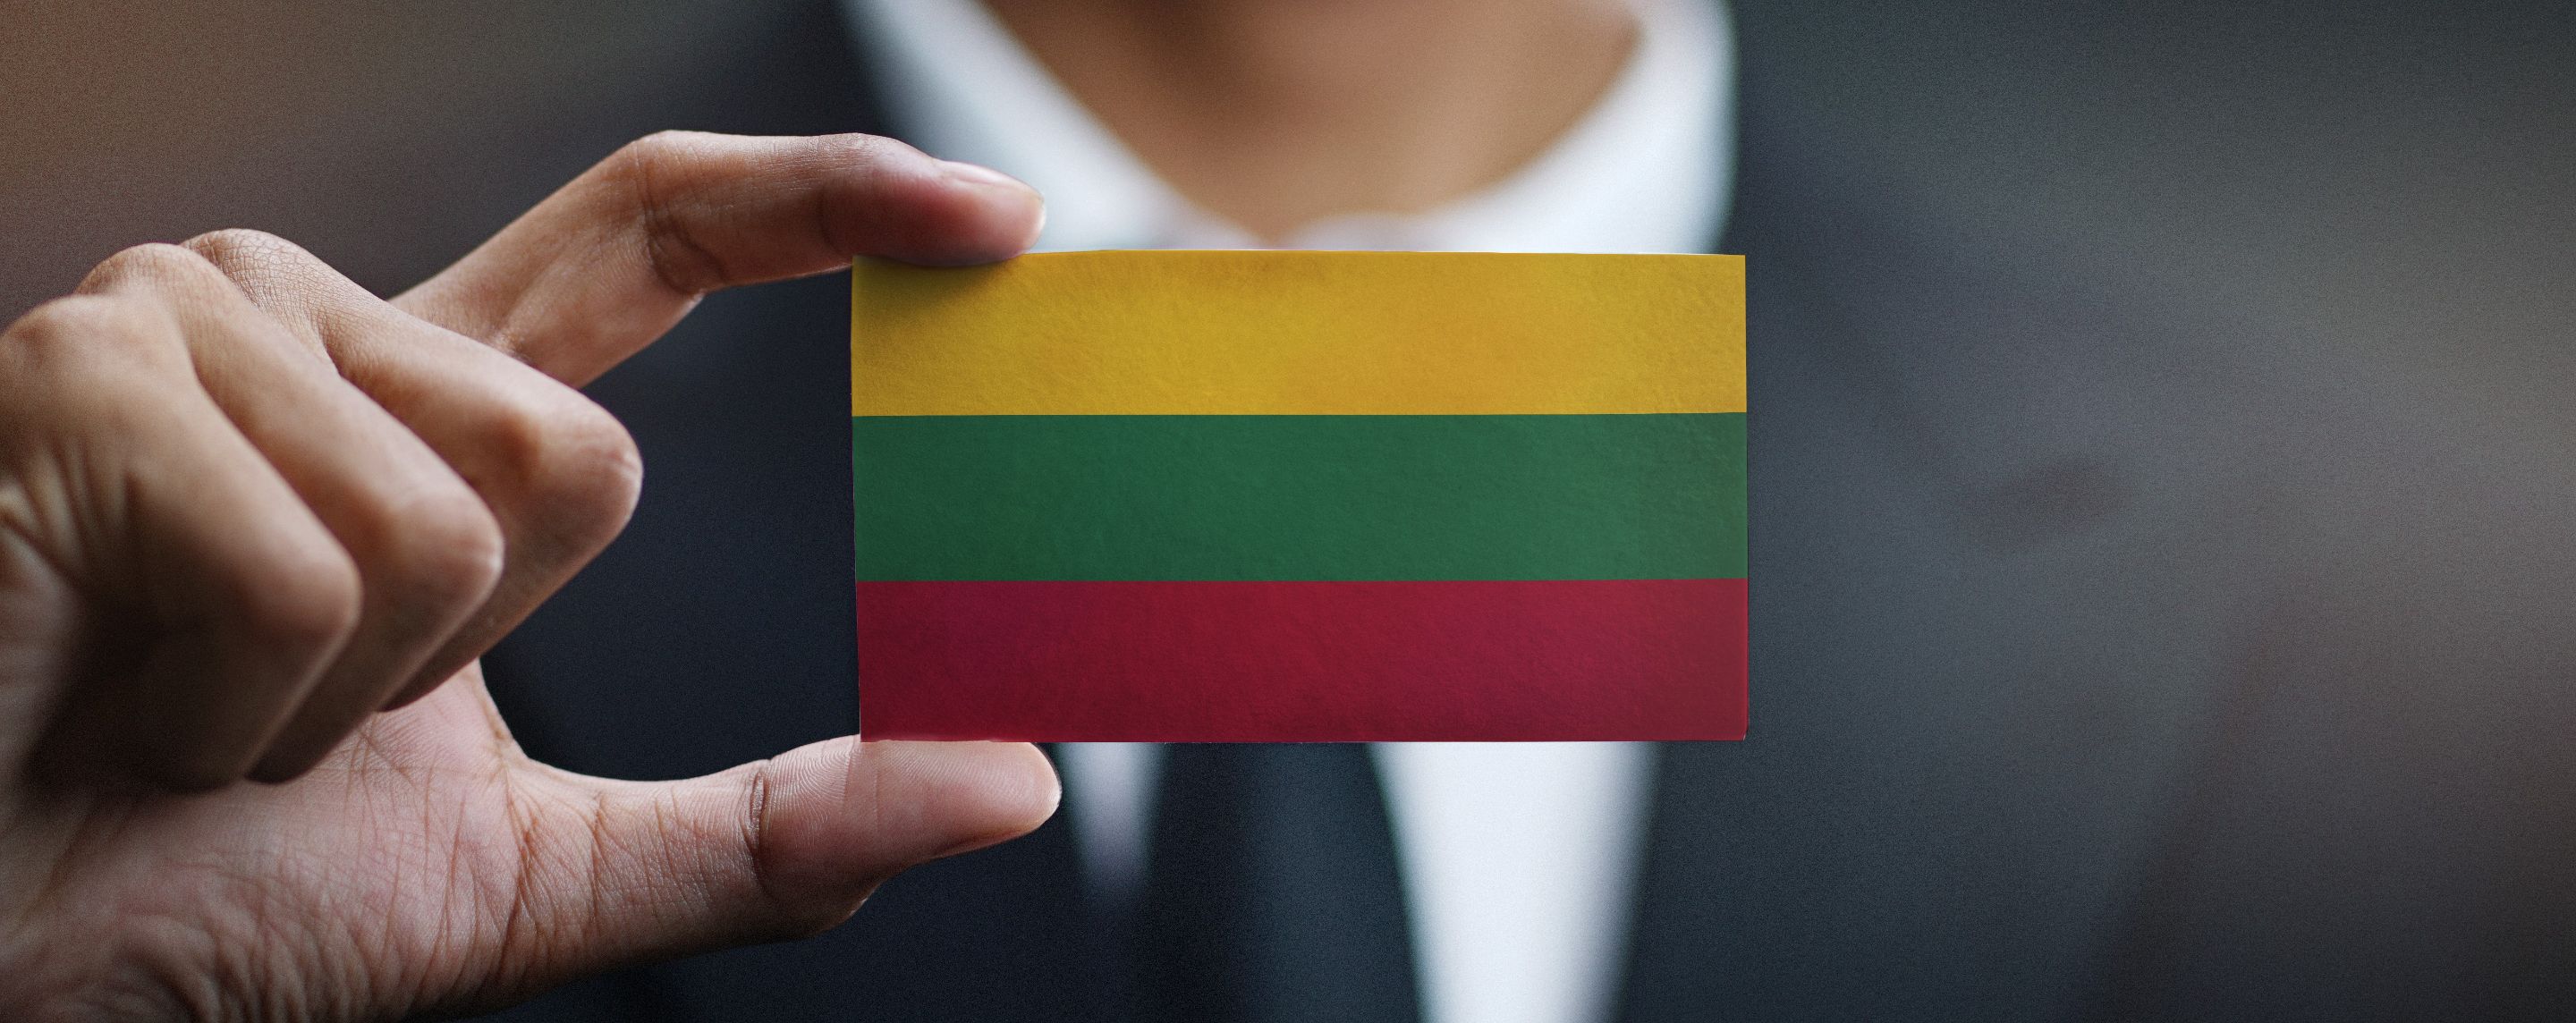 businessman-holding-card-lithuania-flag.jpg